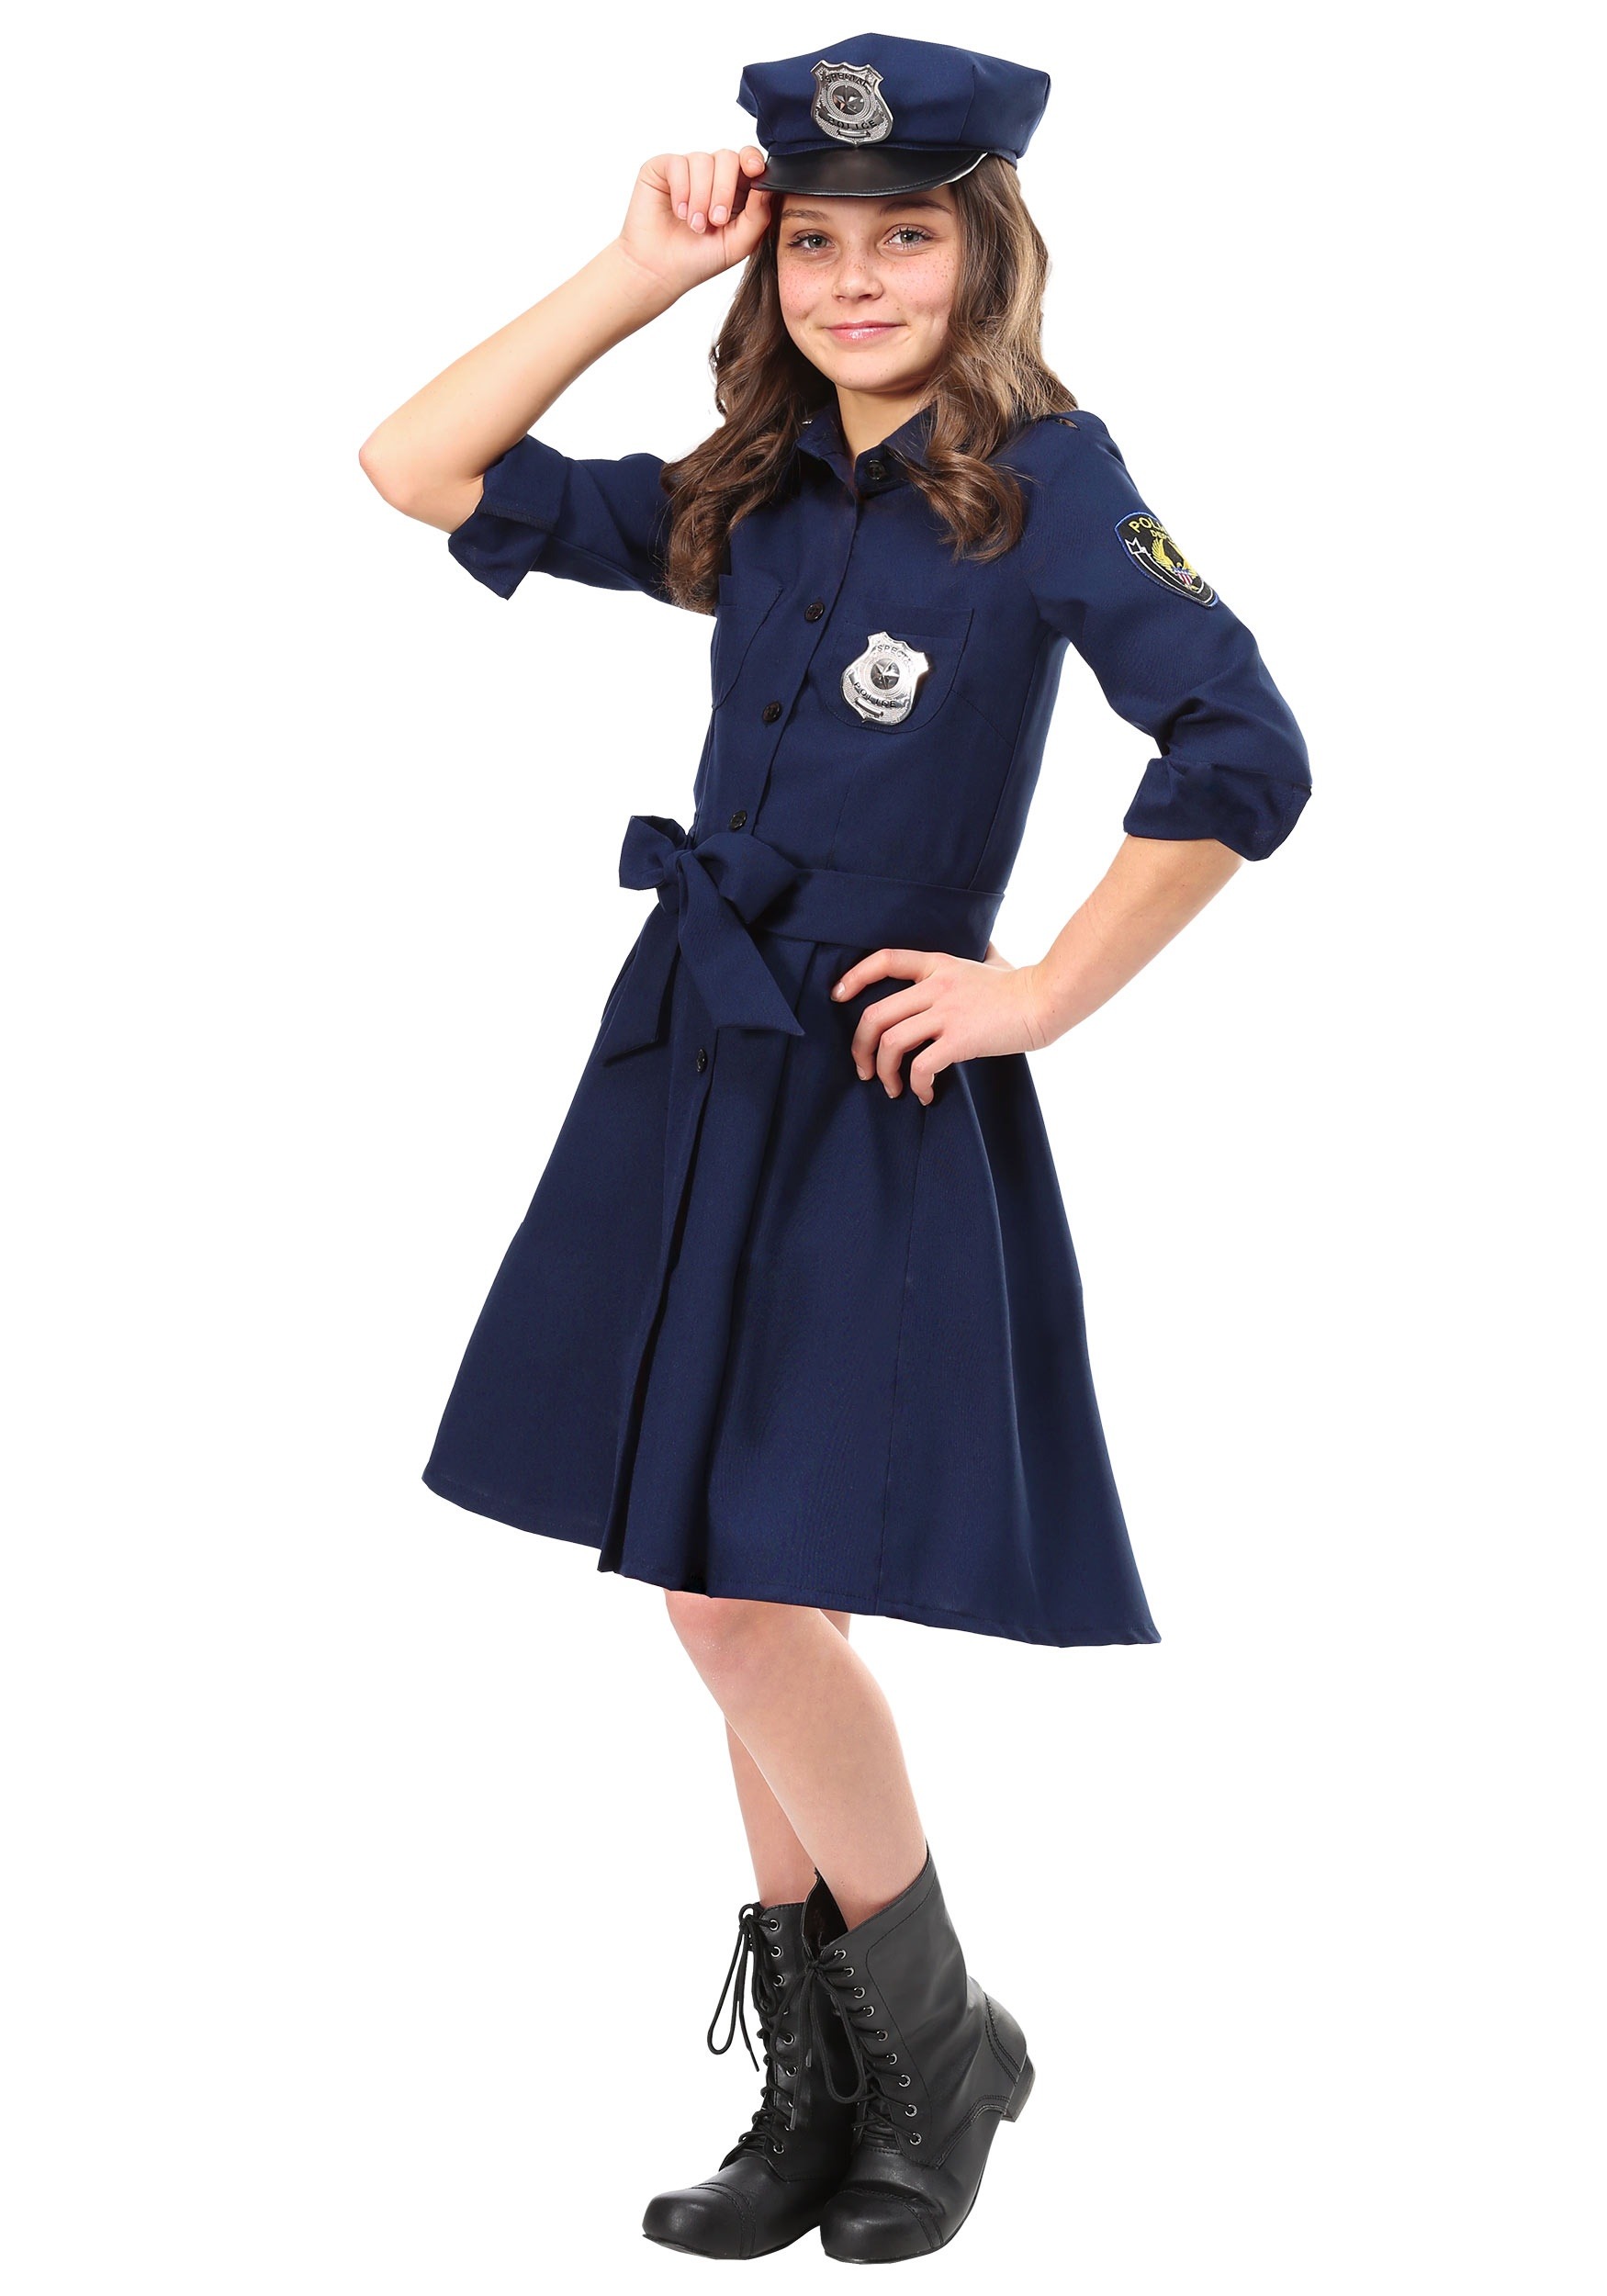 Girls Helpful Police Officer Costume